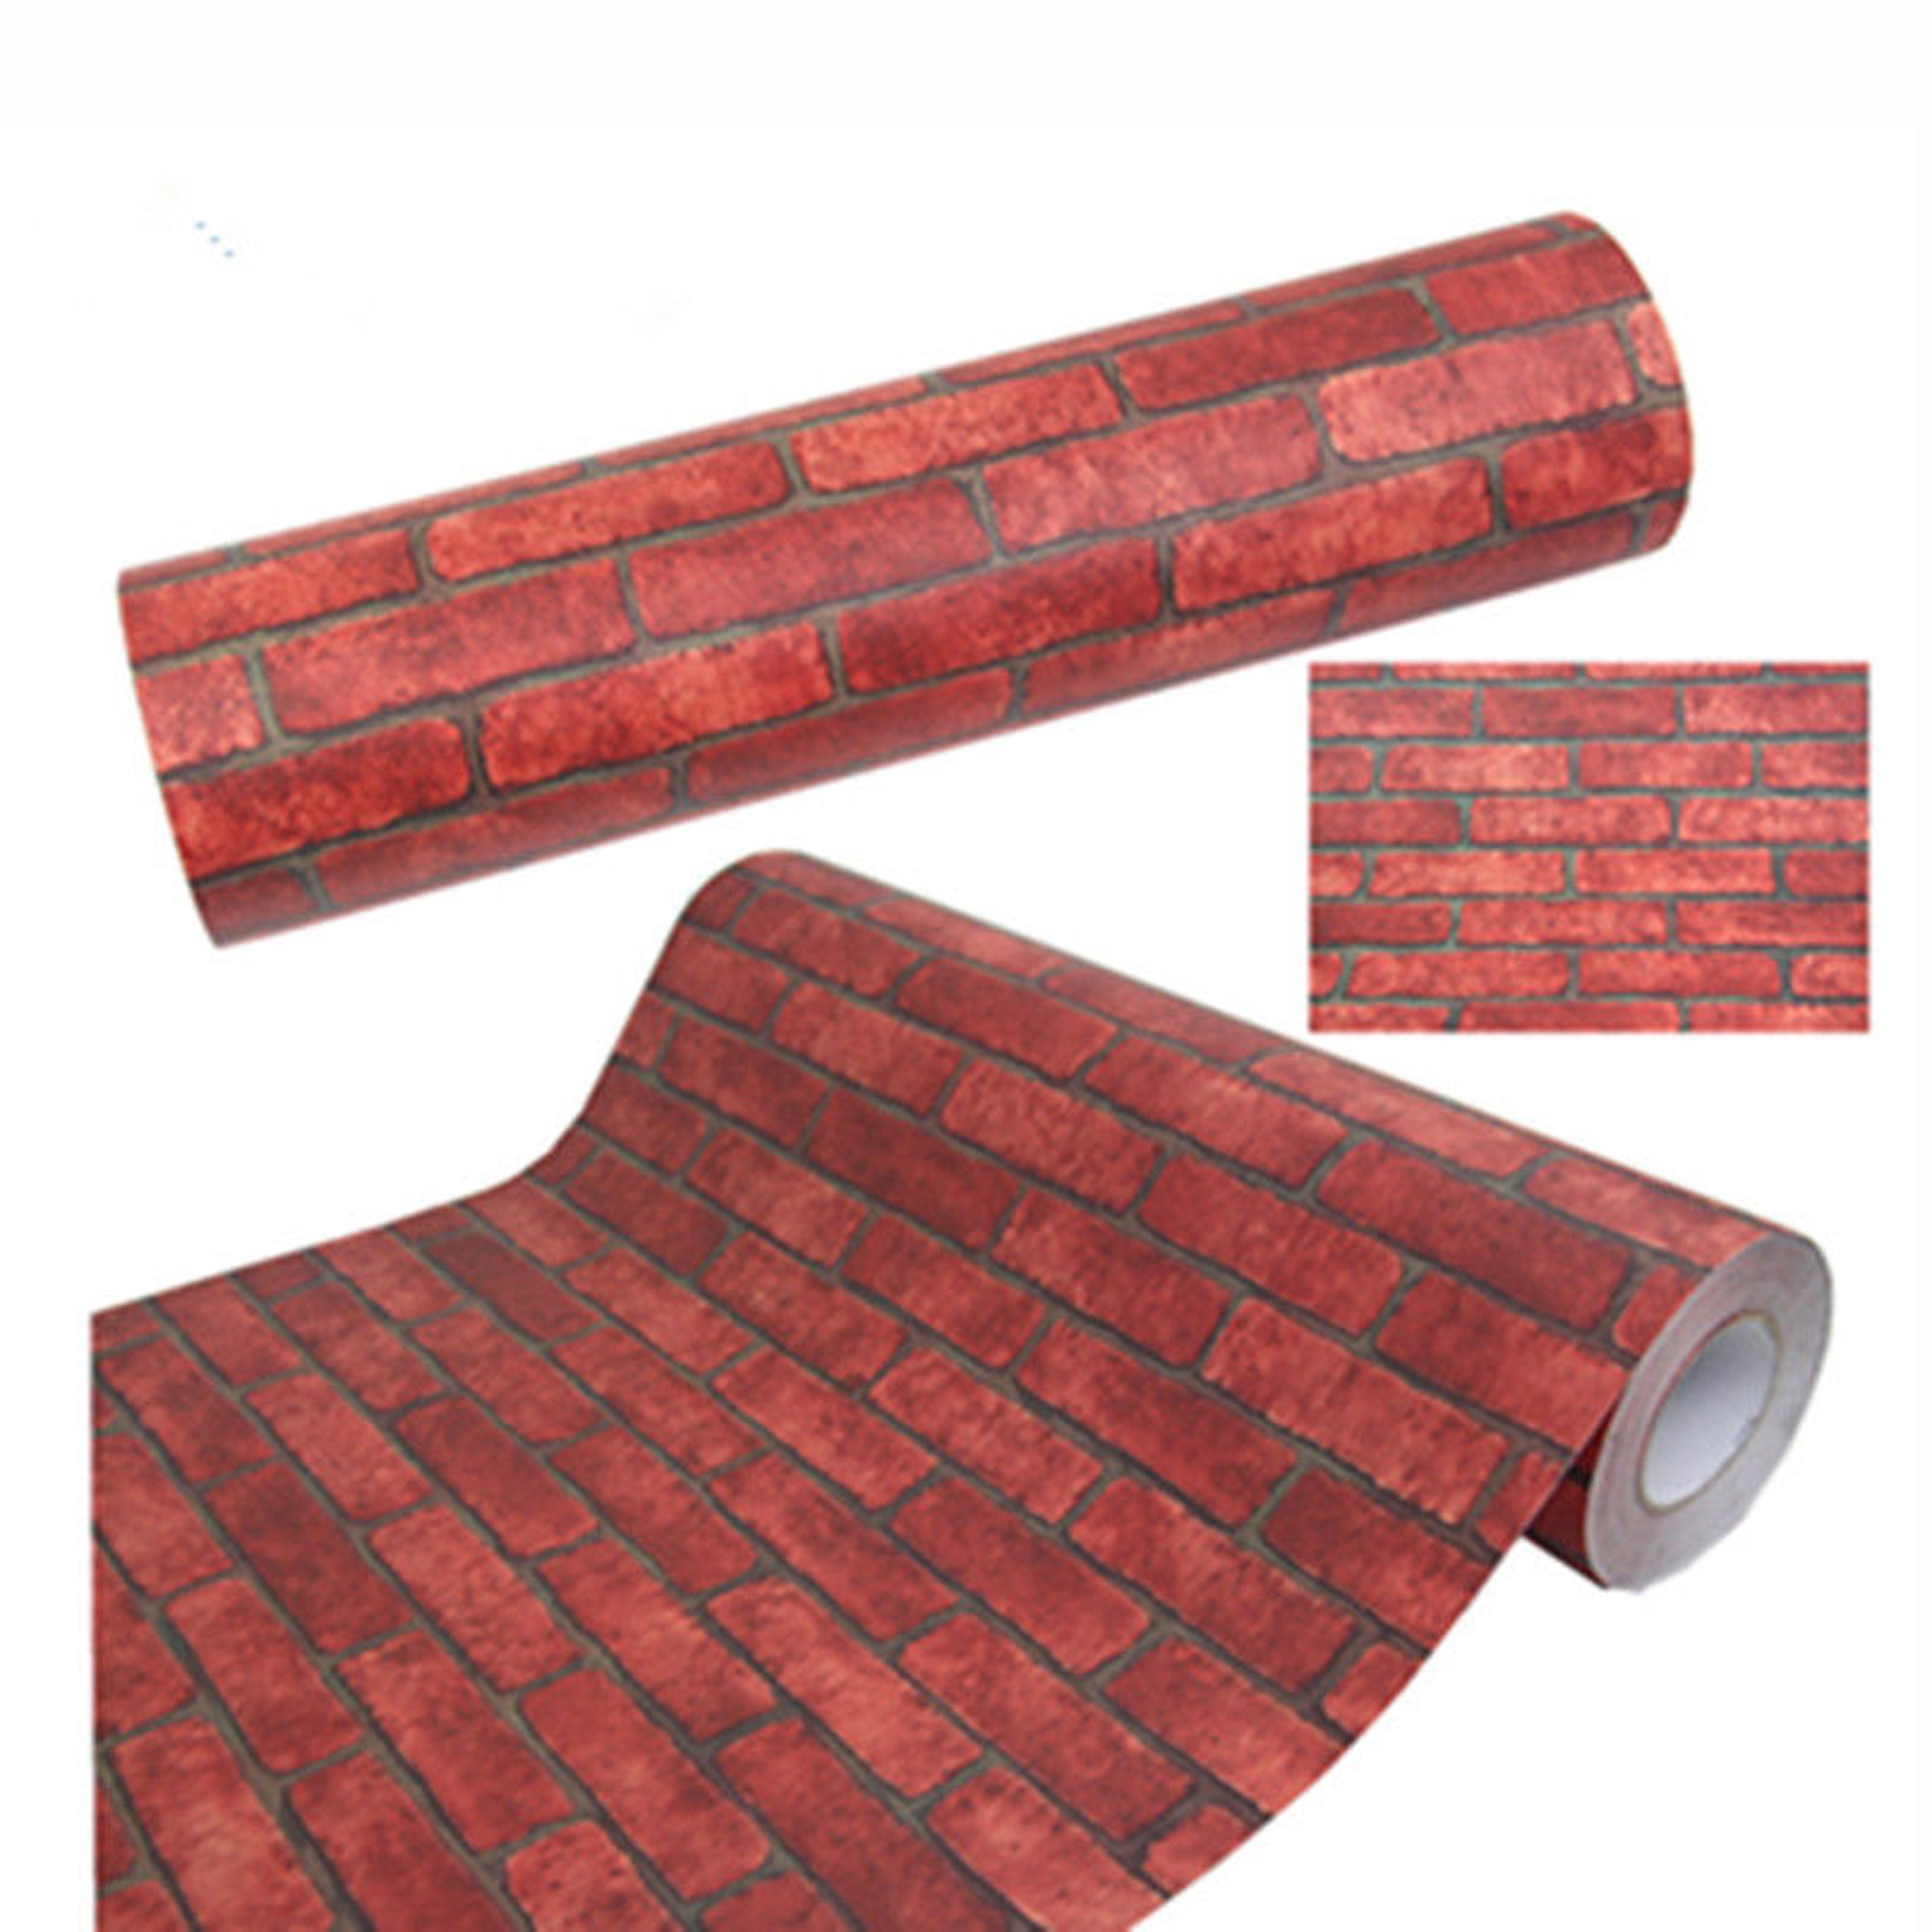 39.4''/ 196.8''/ 393.7'' 3D Brick Wallpaper, Peel and Stick Wallpaper Stone Brick Wallpaper Self Adhesive Removable Wallpaper Textured Brick Wallpaper for Background/Kitchen/Study Room - image 5 of 5